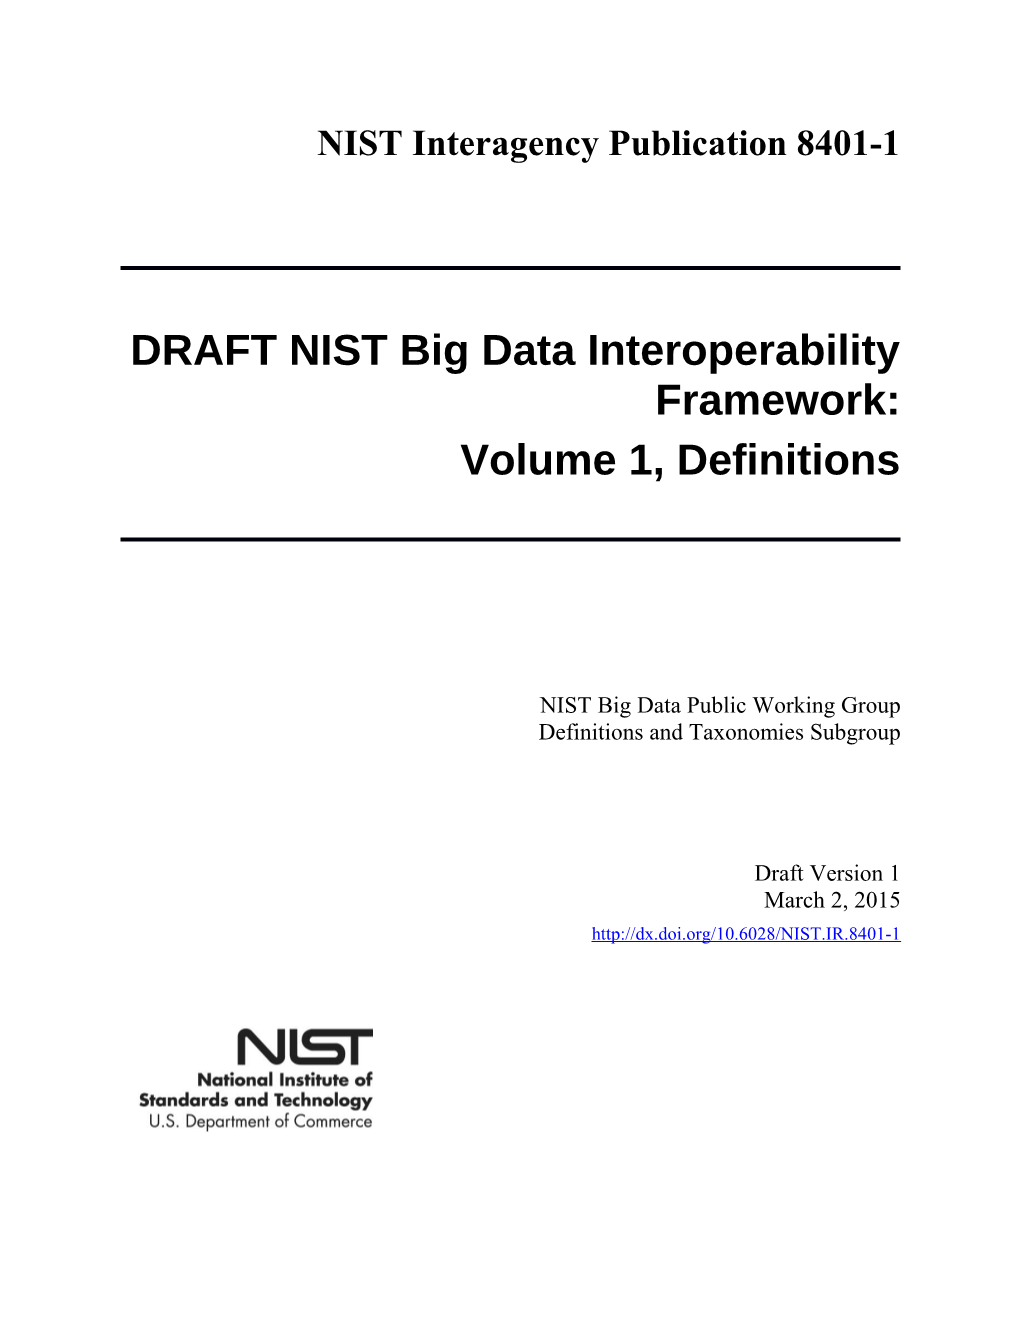 DRAFT NIST Big Data Interoperability Framework s1